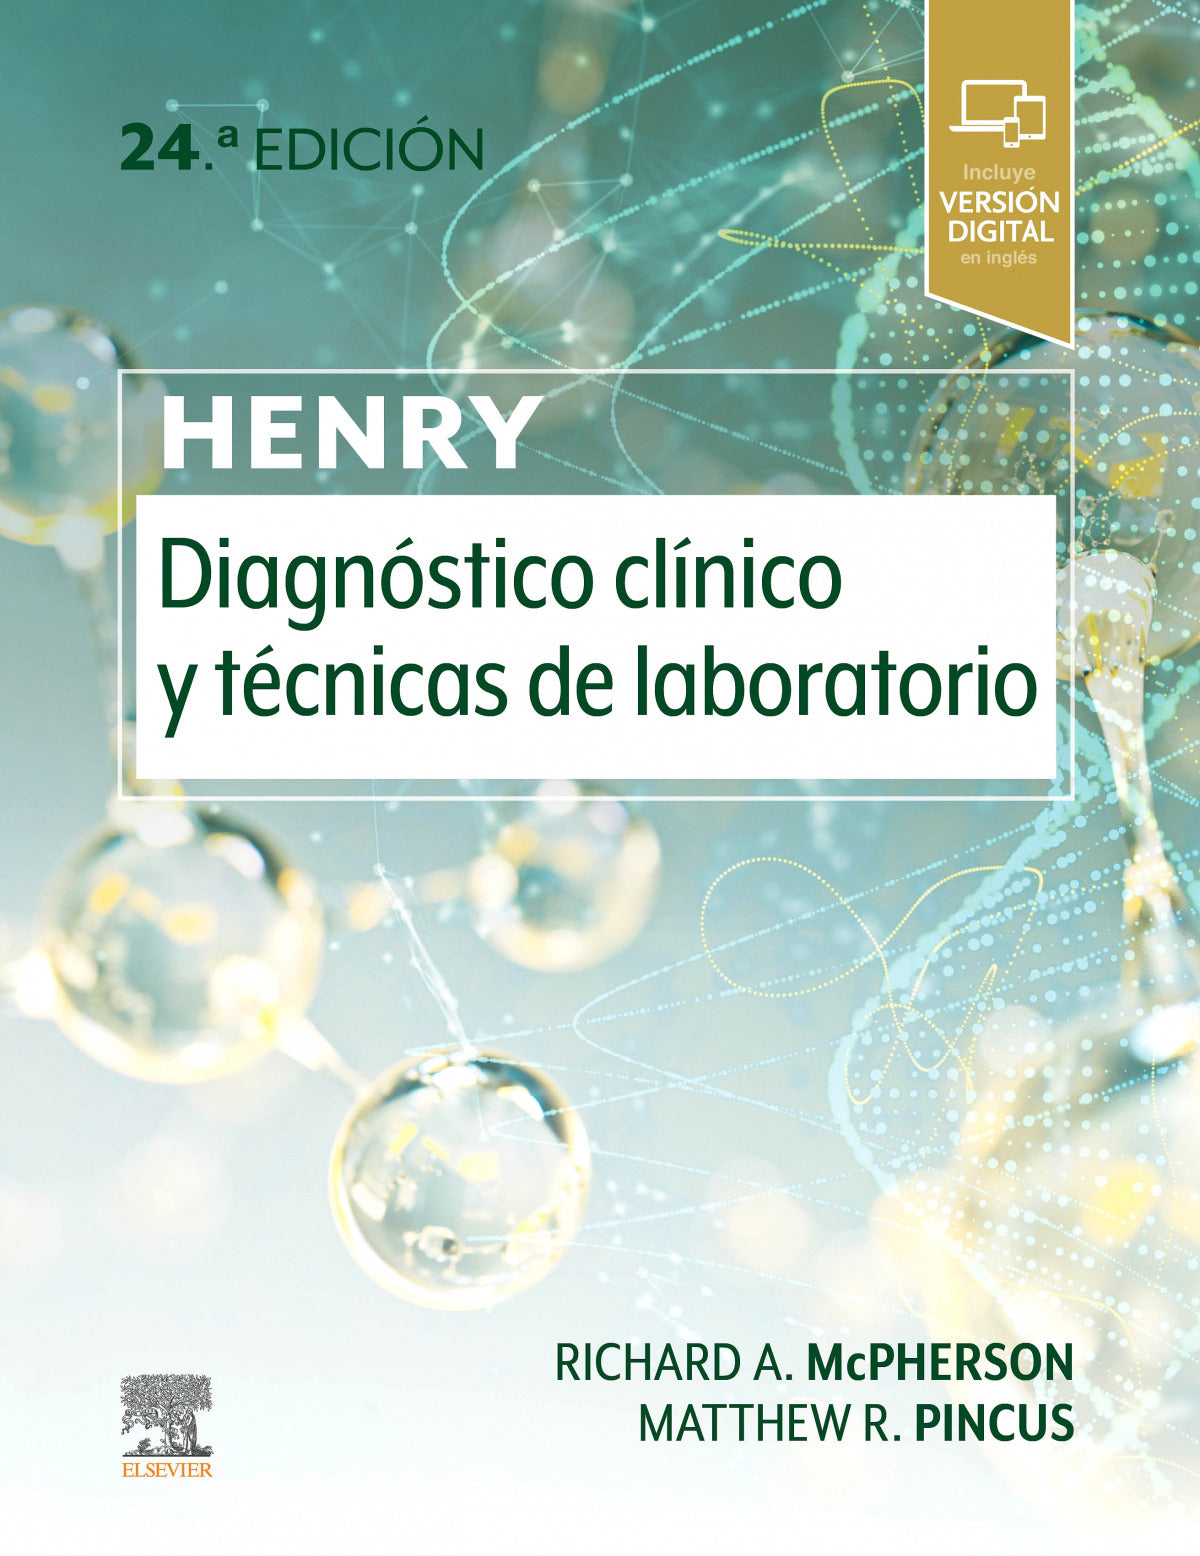 MCPHERSON . Henry Diagnóstico clínico y técnicas de laboratorio